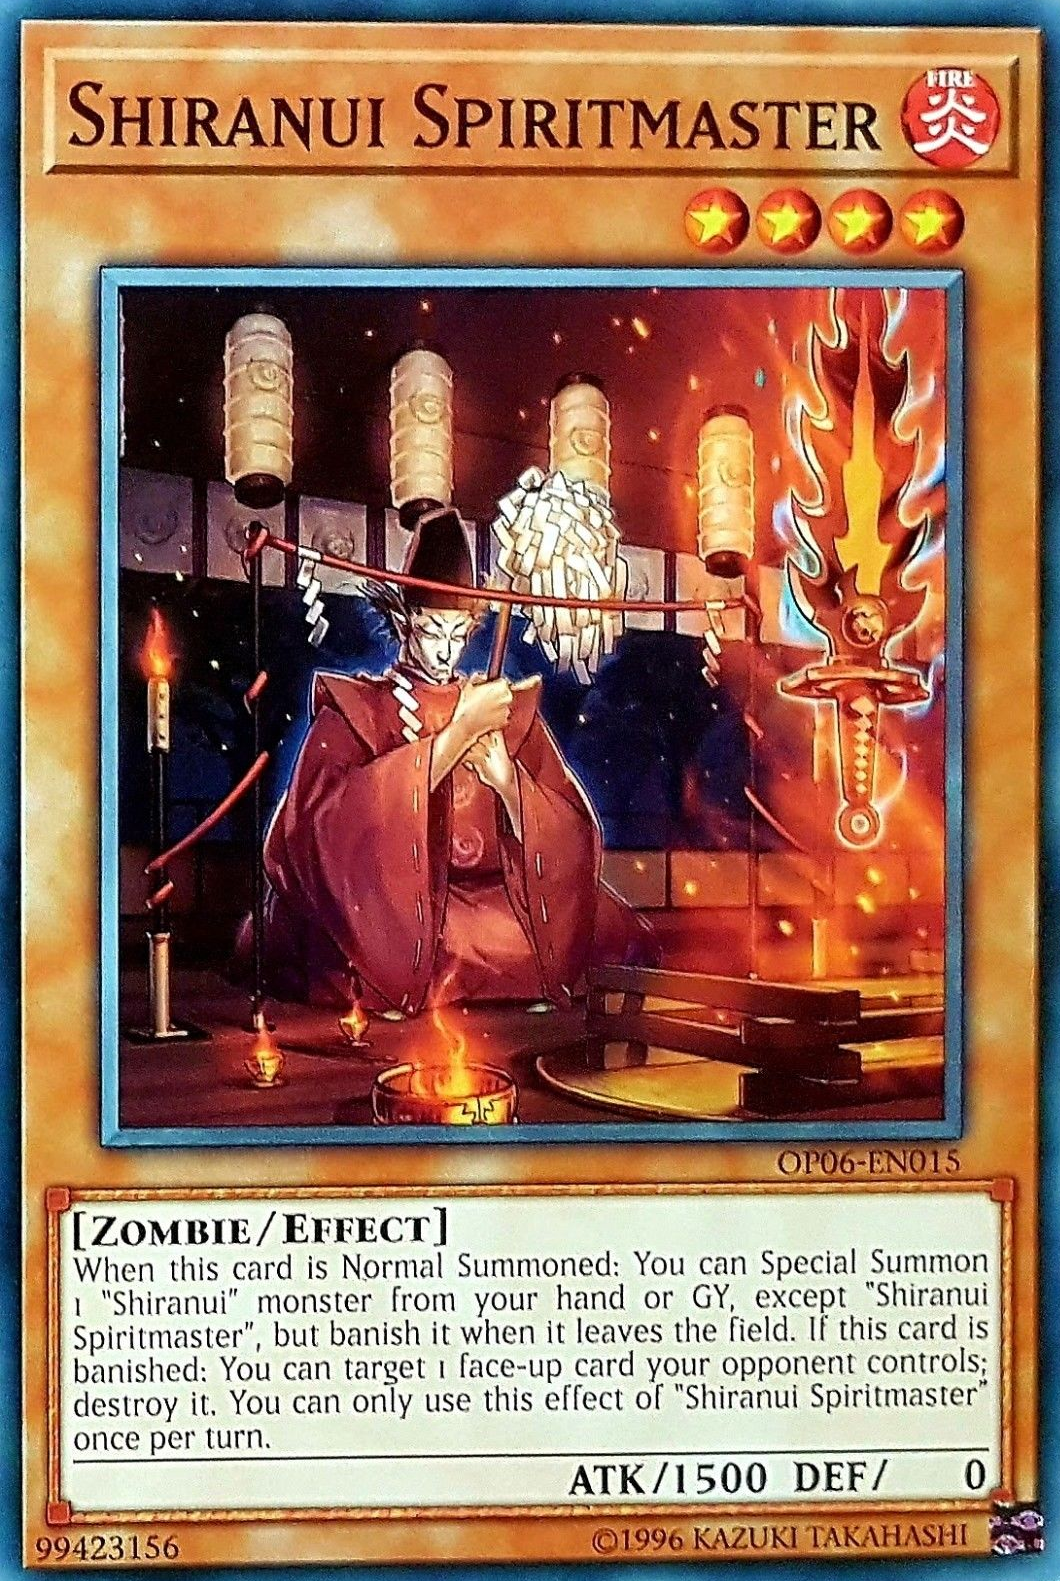 Shiranui Spiritmaster [OP06-EN015] Common - Duel Kingdom